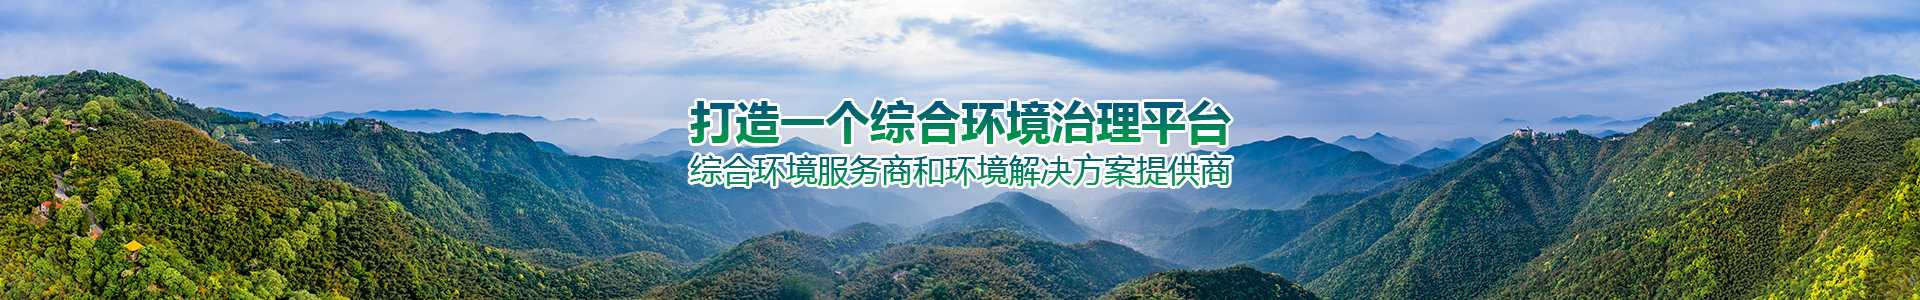 Zhejiang environmental protection technology, please choose Zhejiang Hong Dian Environmental Protection Technology Co., Ltd.